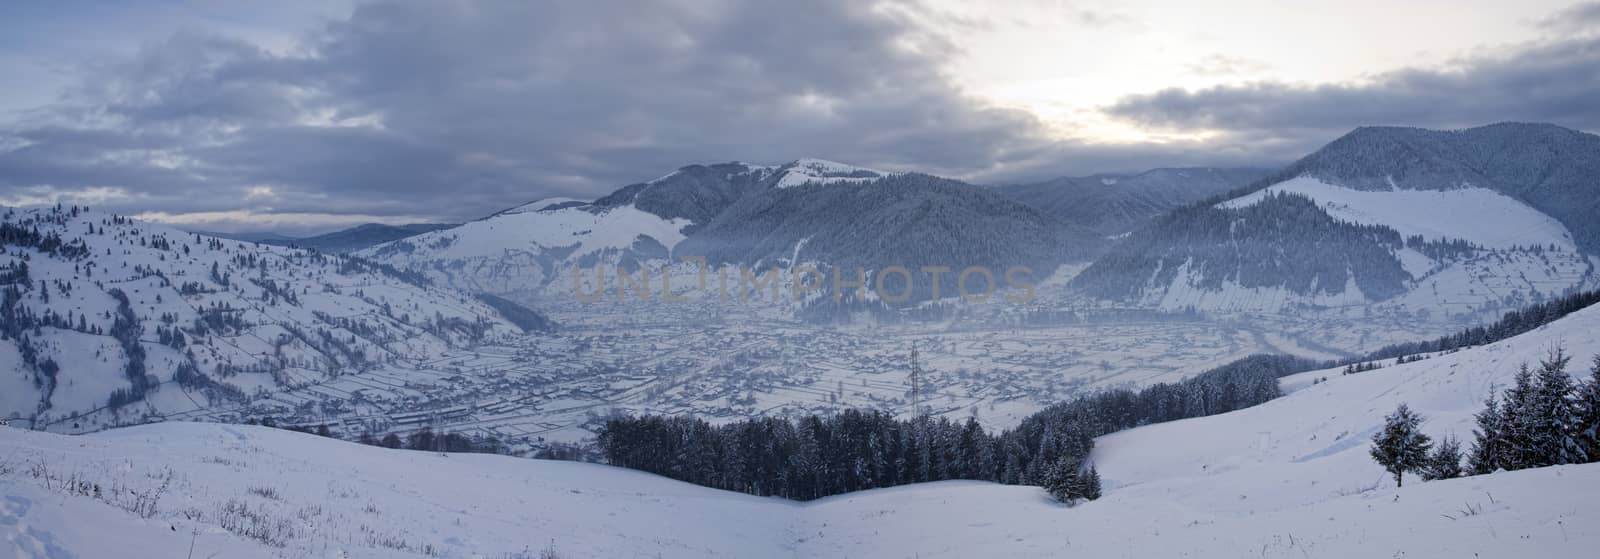 Rural landscape of winter village in Romania